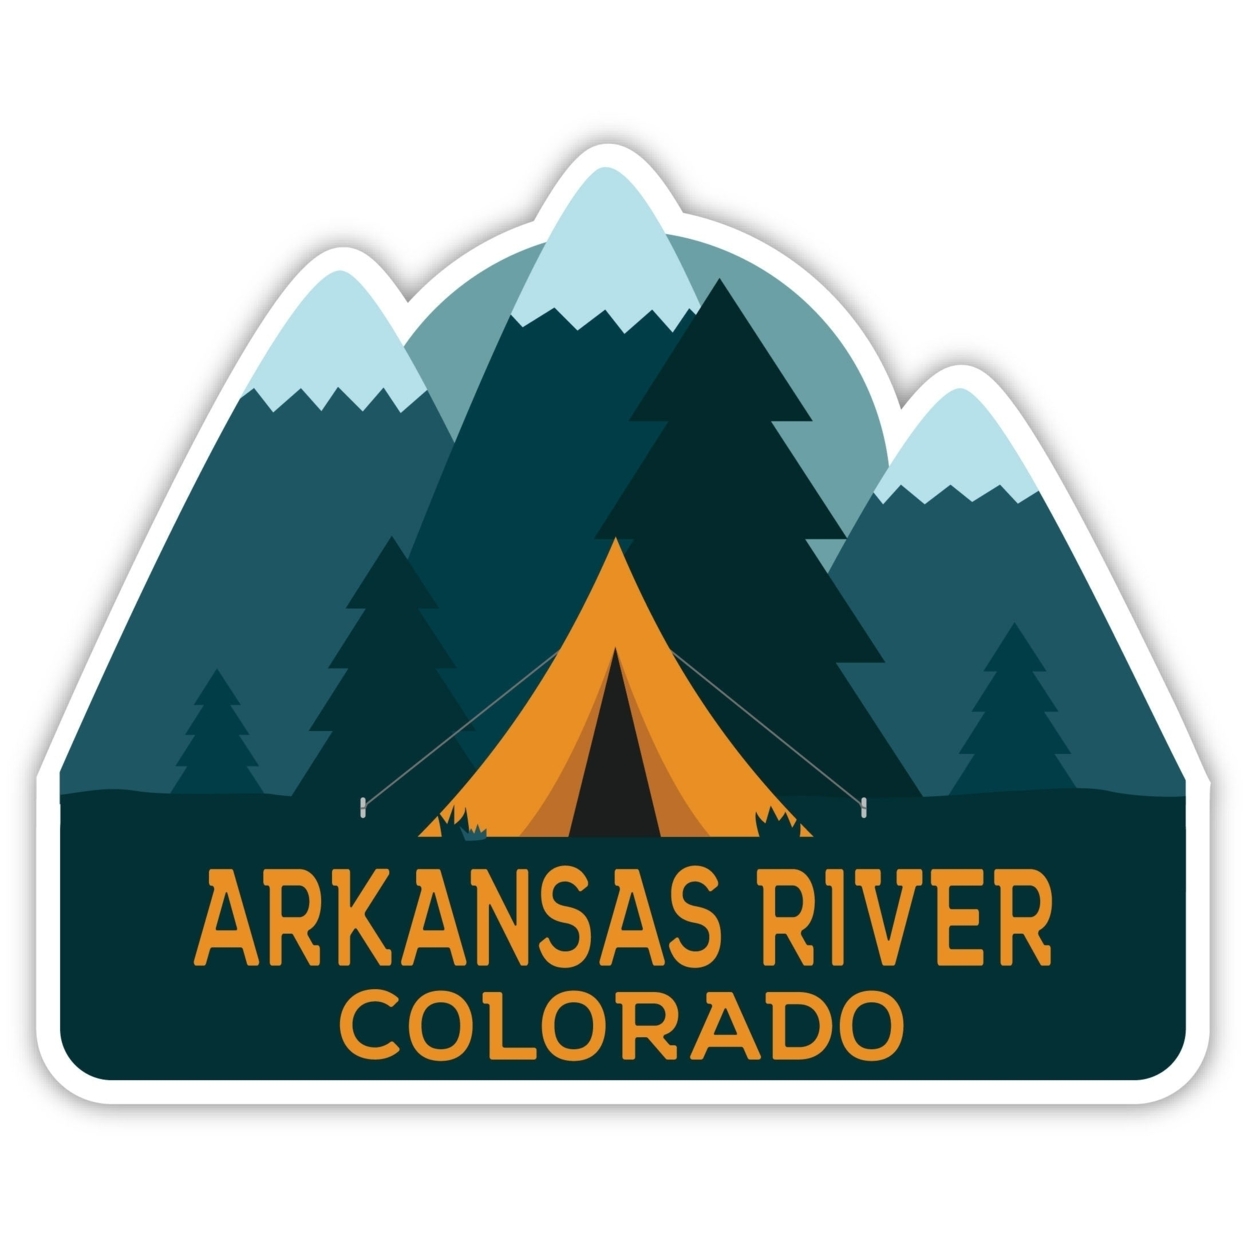 Arkansas River Colorado Souvenir Decorative Stickers (Choose Theme And Size) - 4-Pack, 2-Inch, Tent